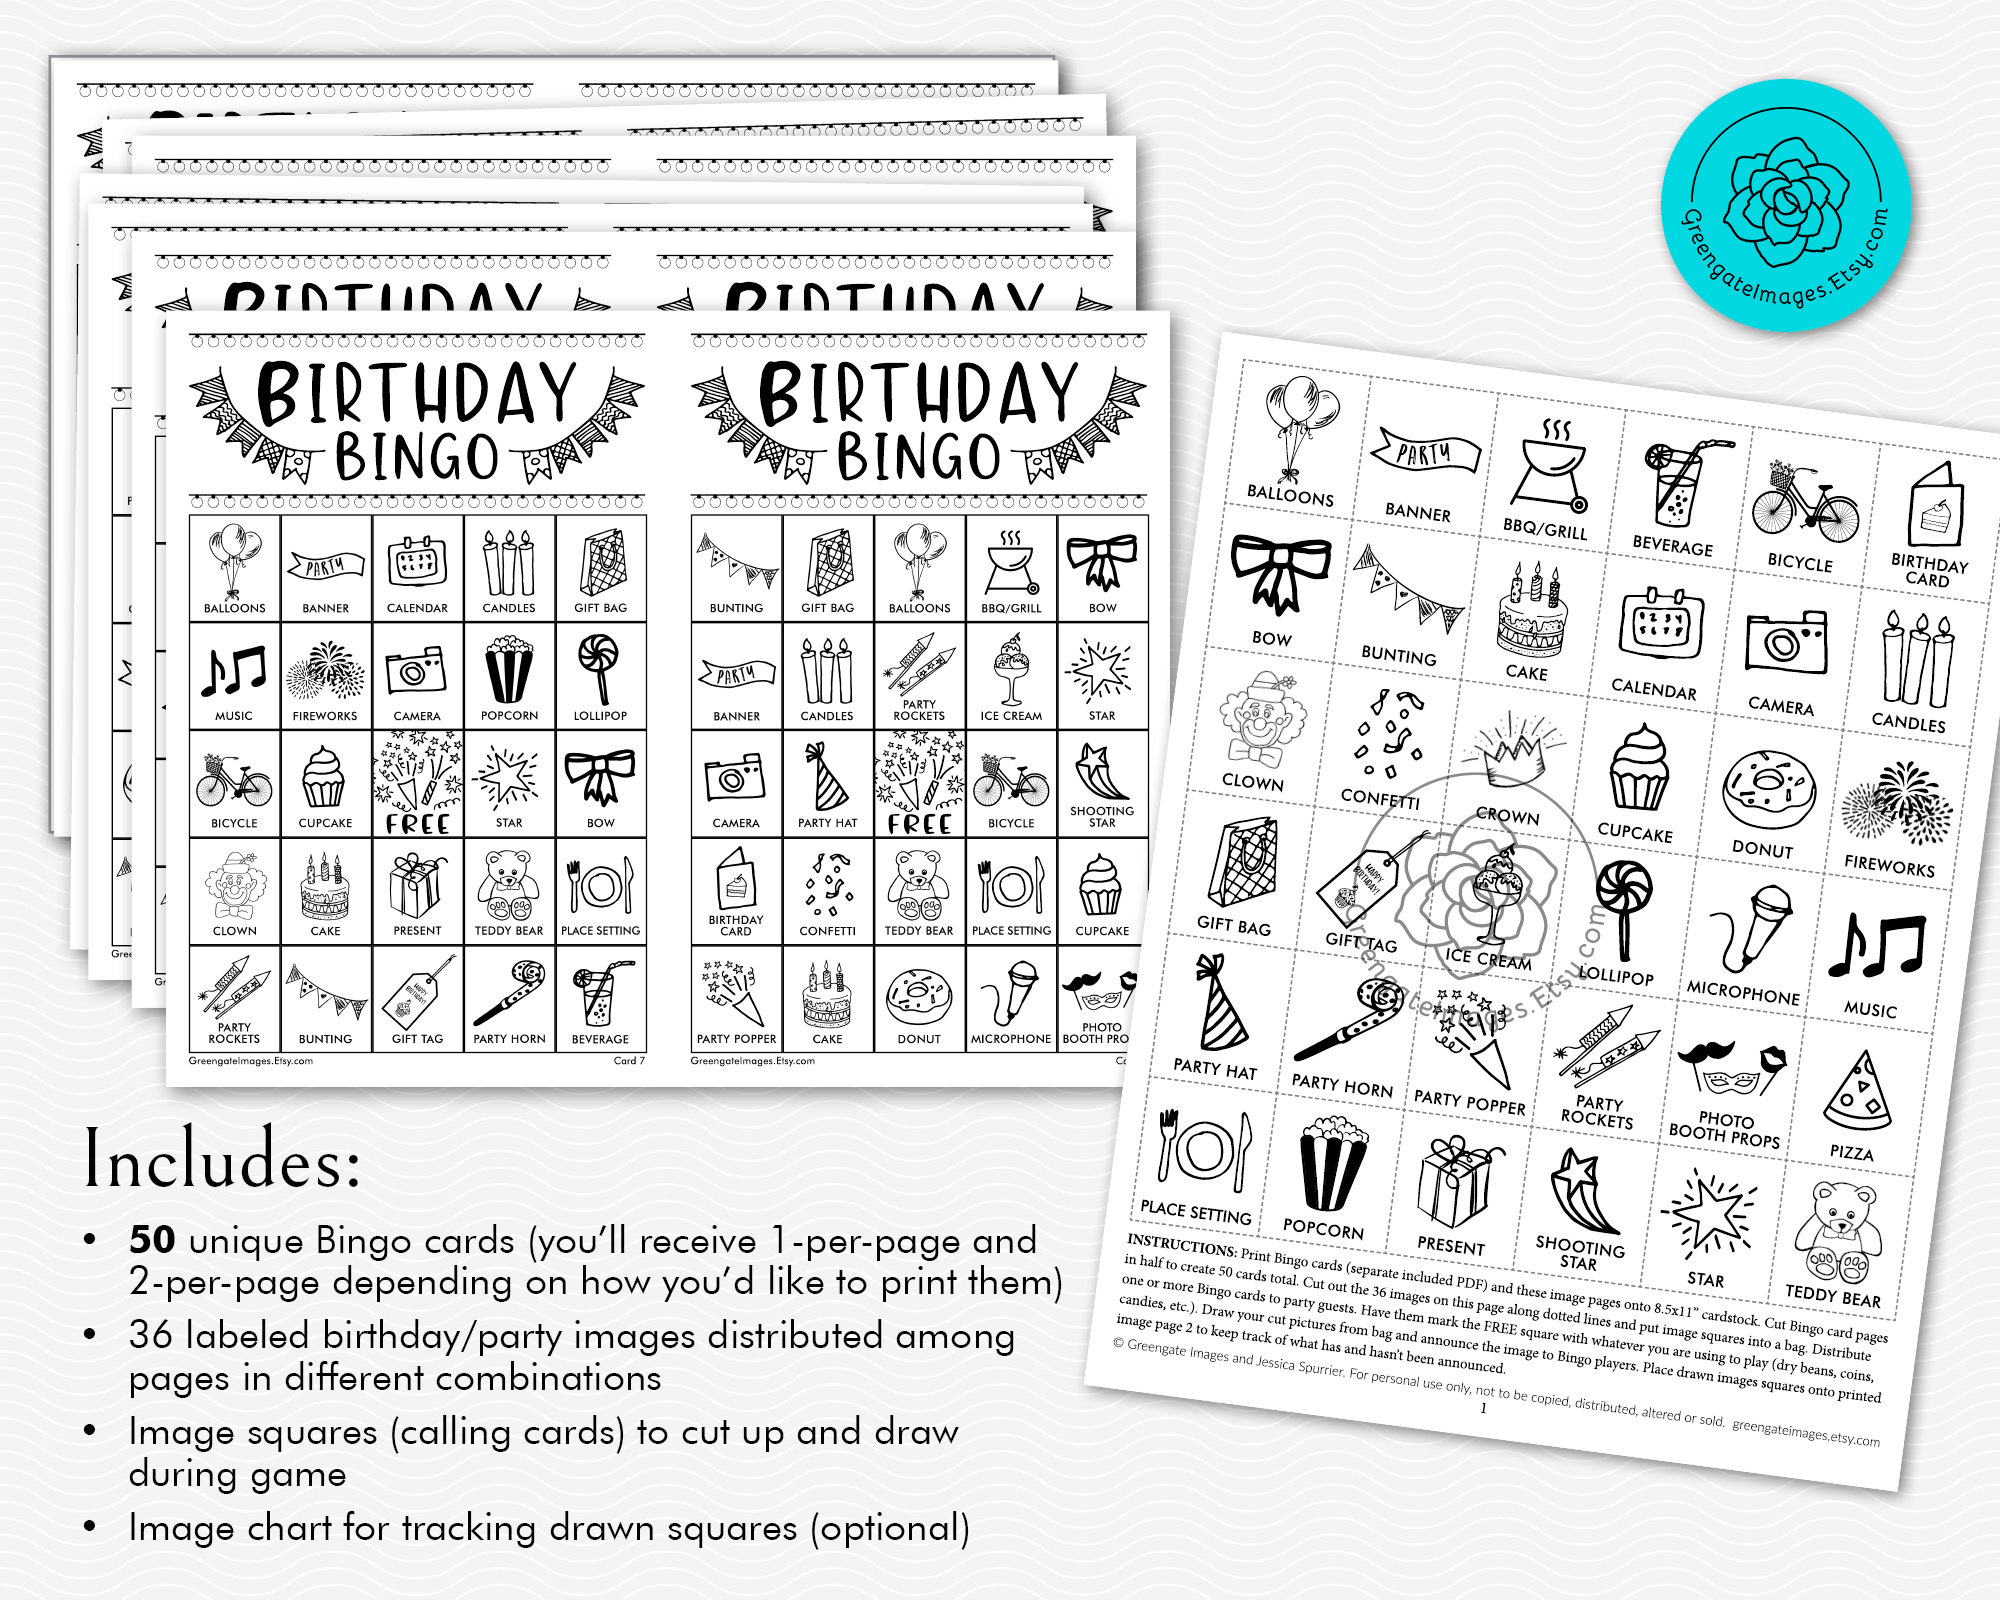 Senior Citizen Bingo Birthday Card - Unique Cards + Gifts – FRIVVY